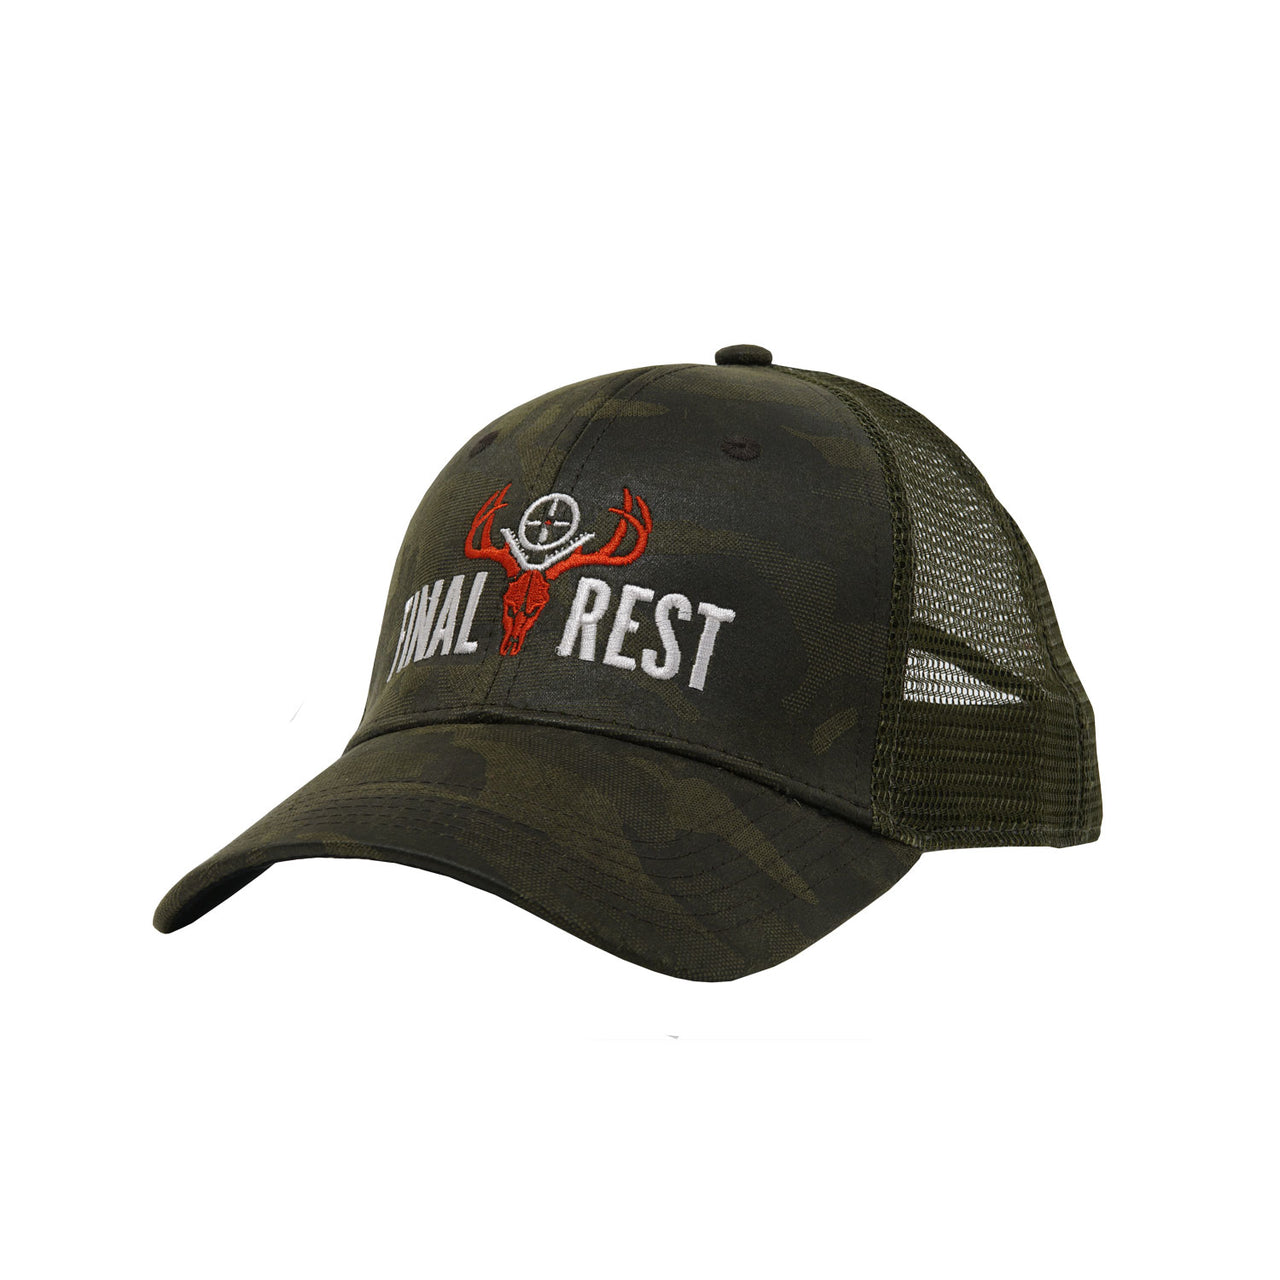 Final Rest Camo Snapback Hat